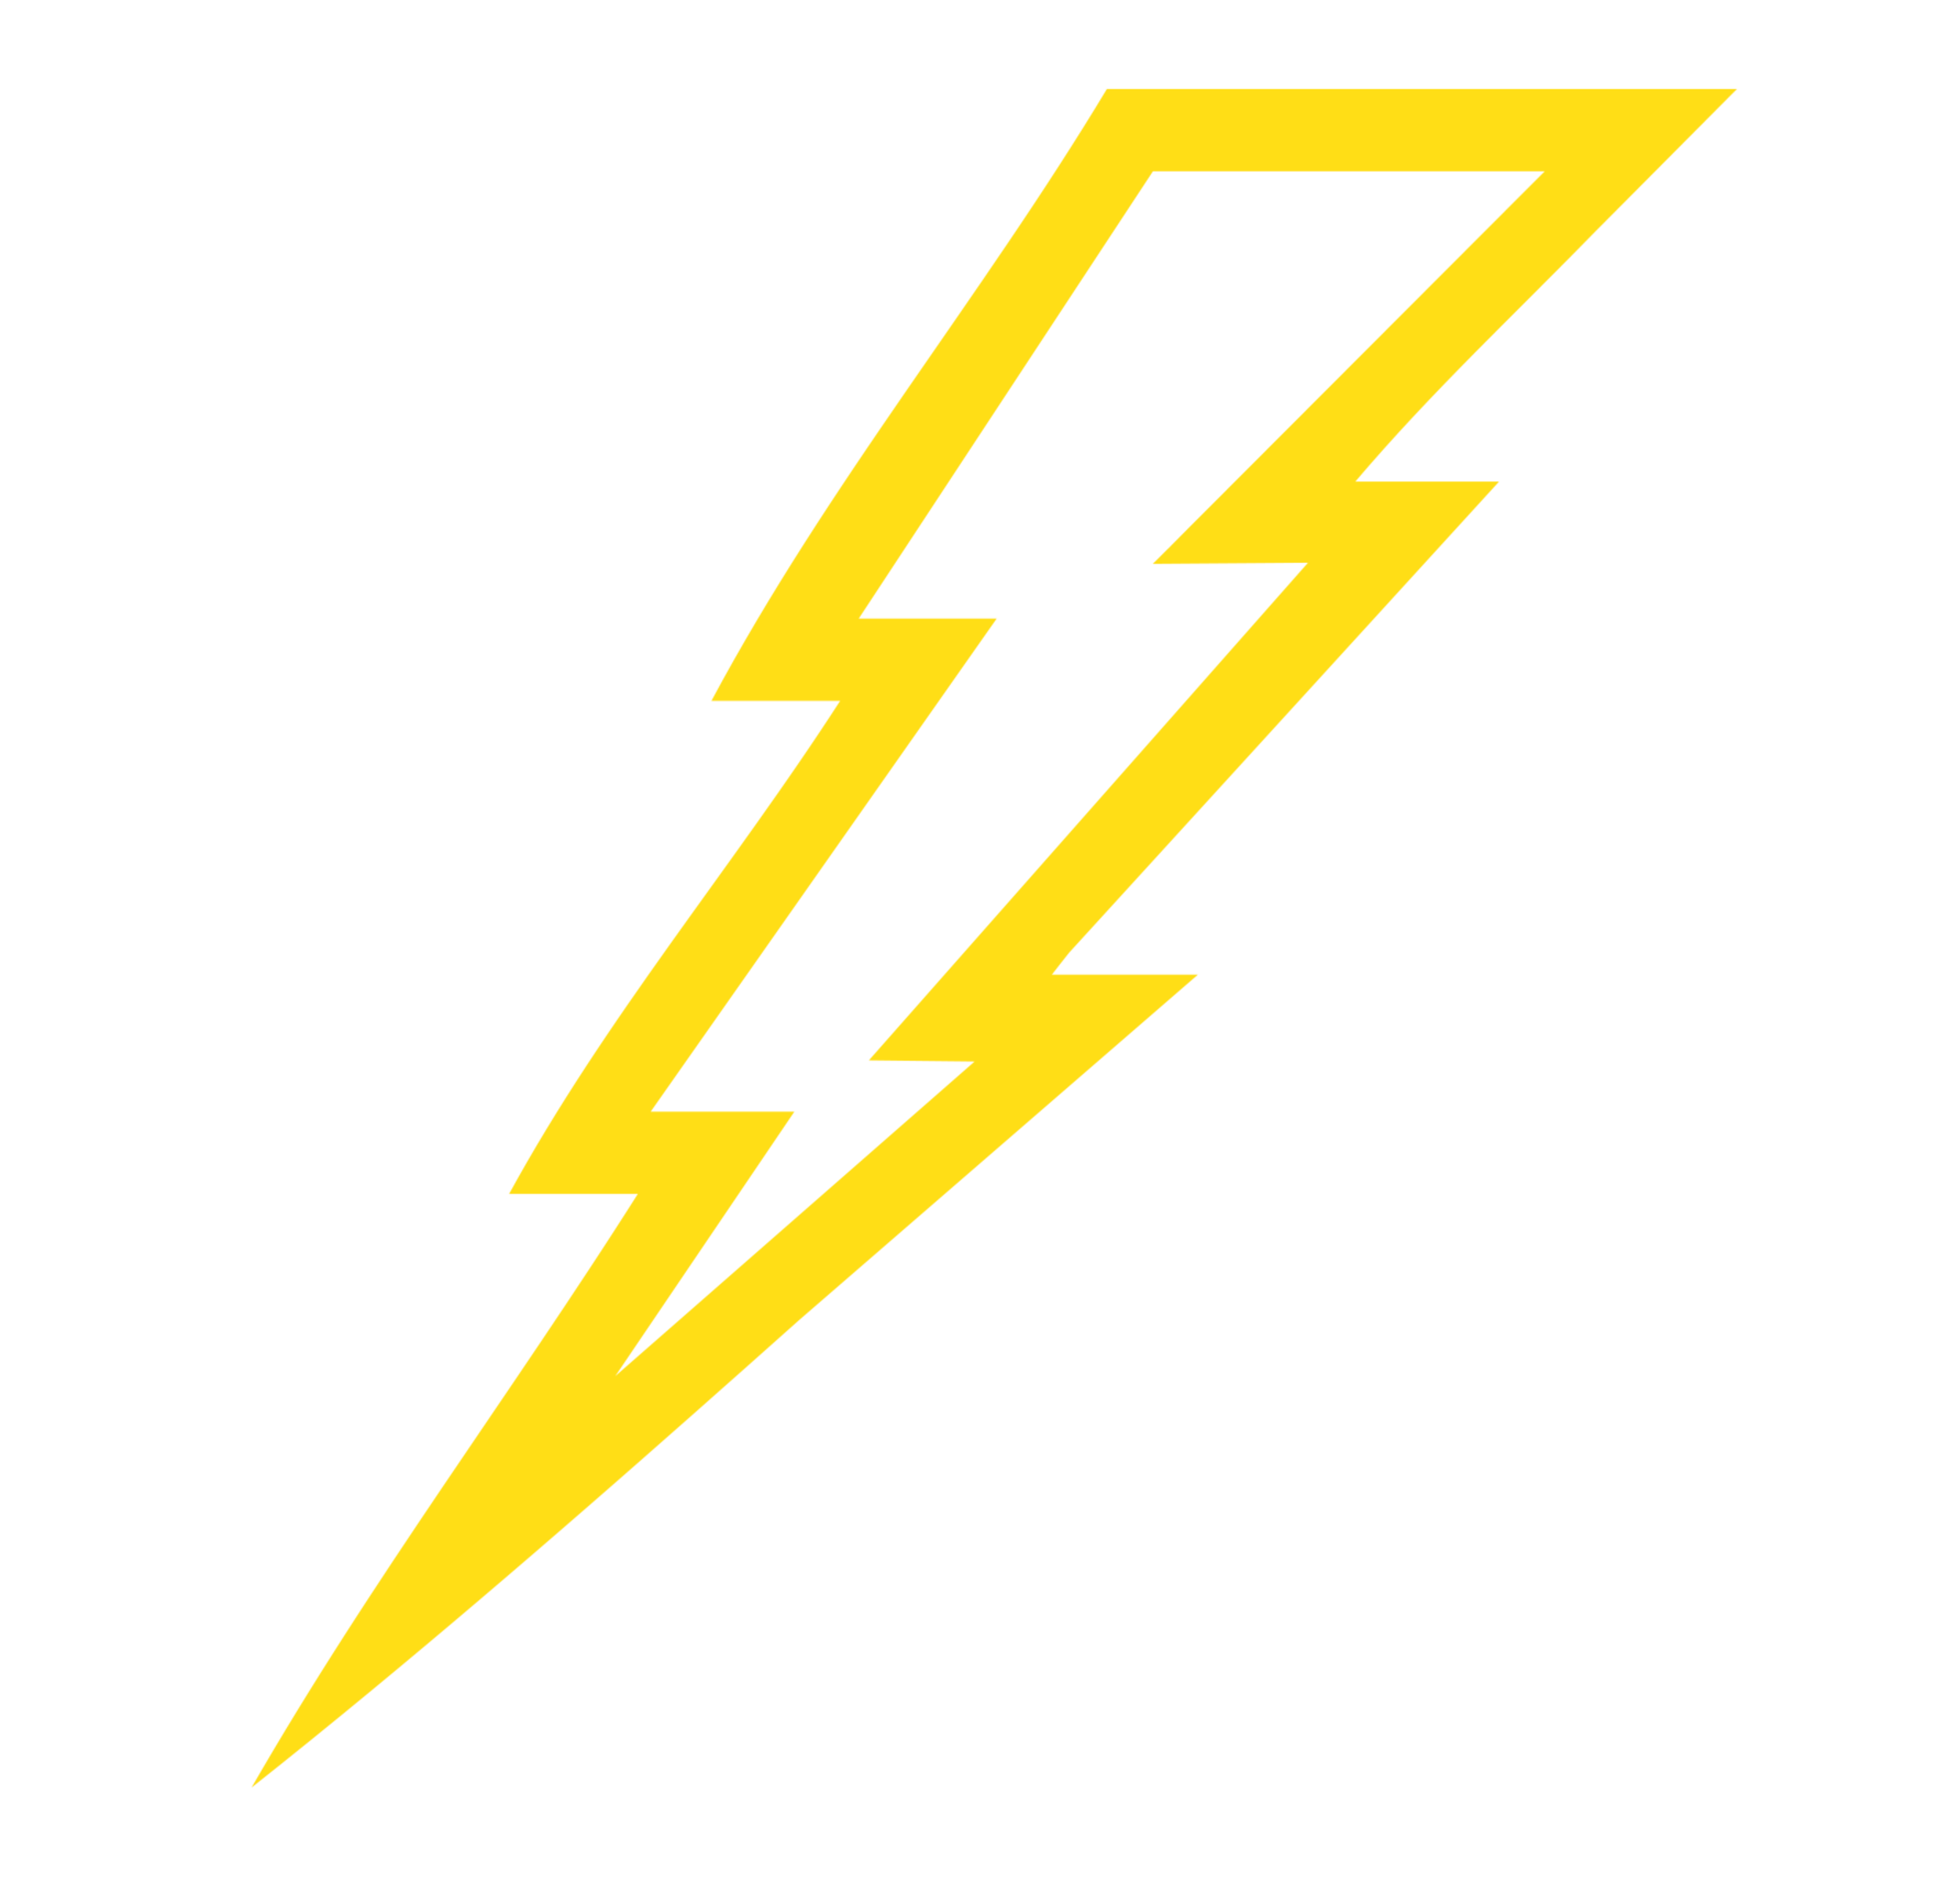 Lightning Bolt Image | Free Download Clip Art | Free Clip Art | on ...